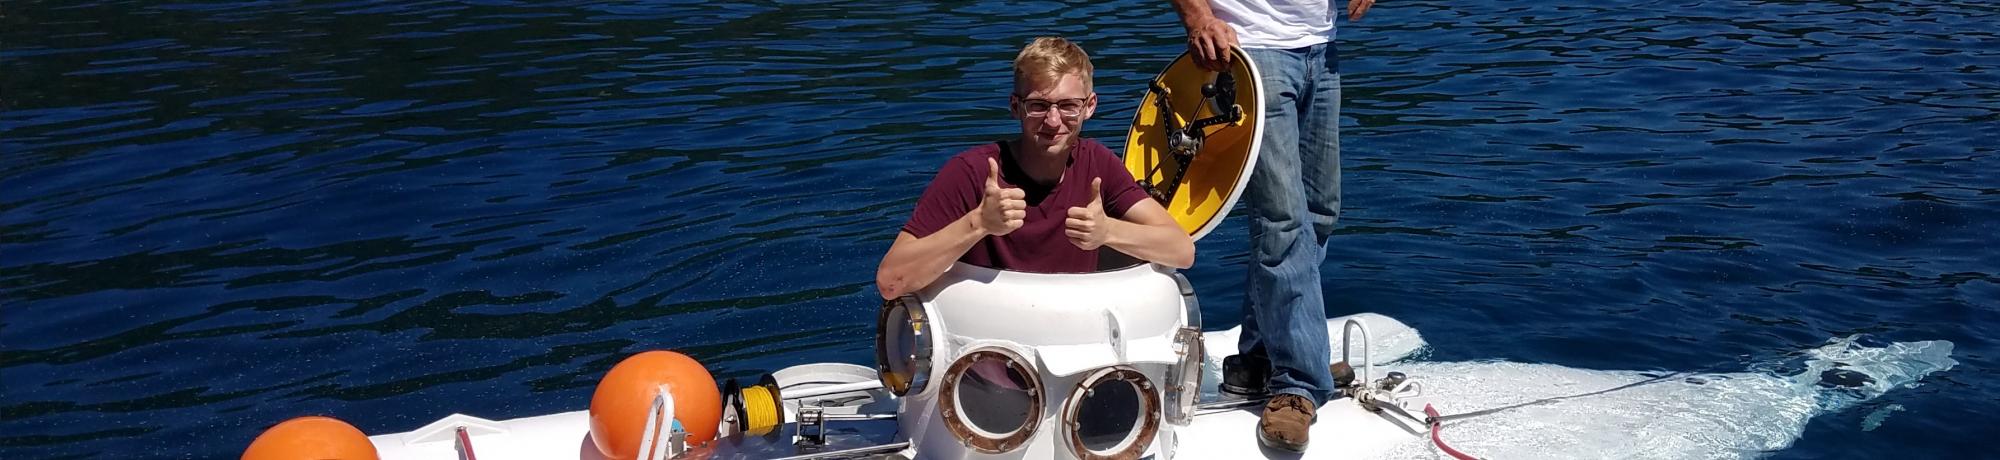 2018 Summer Intern Noah tests a submarine in Lake Tahoe